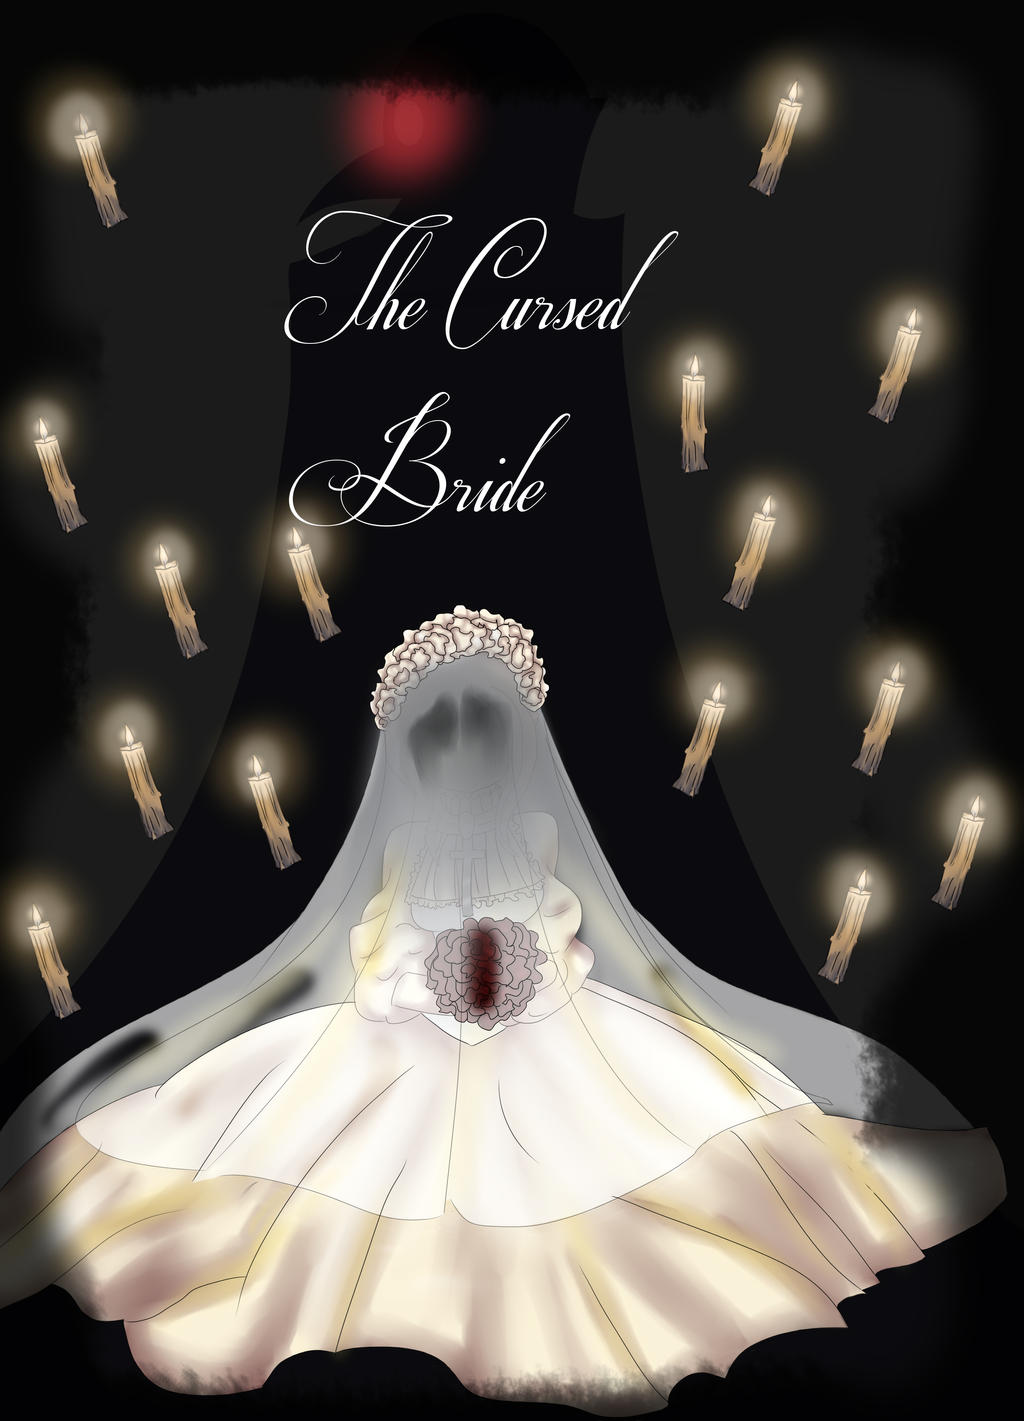 { The Cursed Bride }